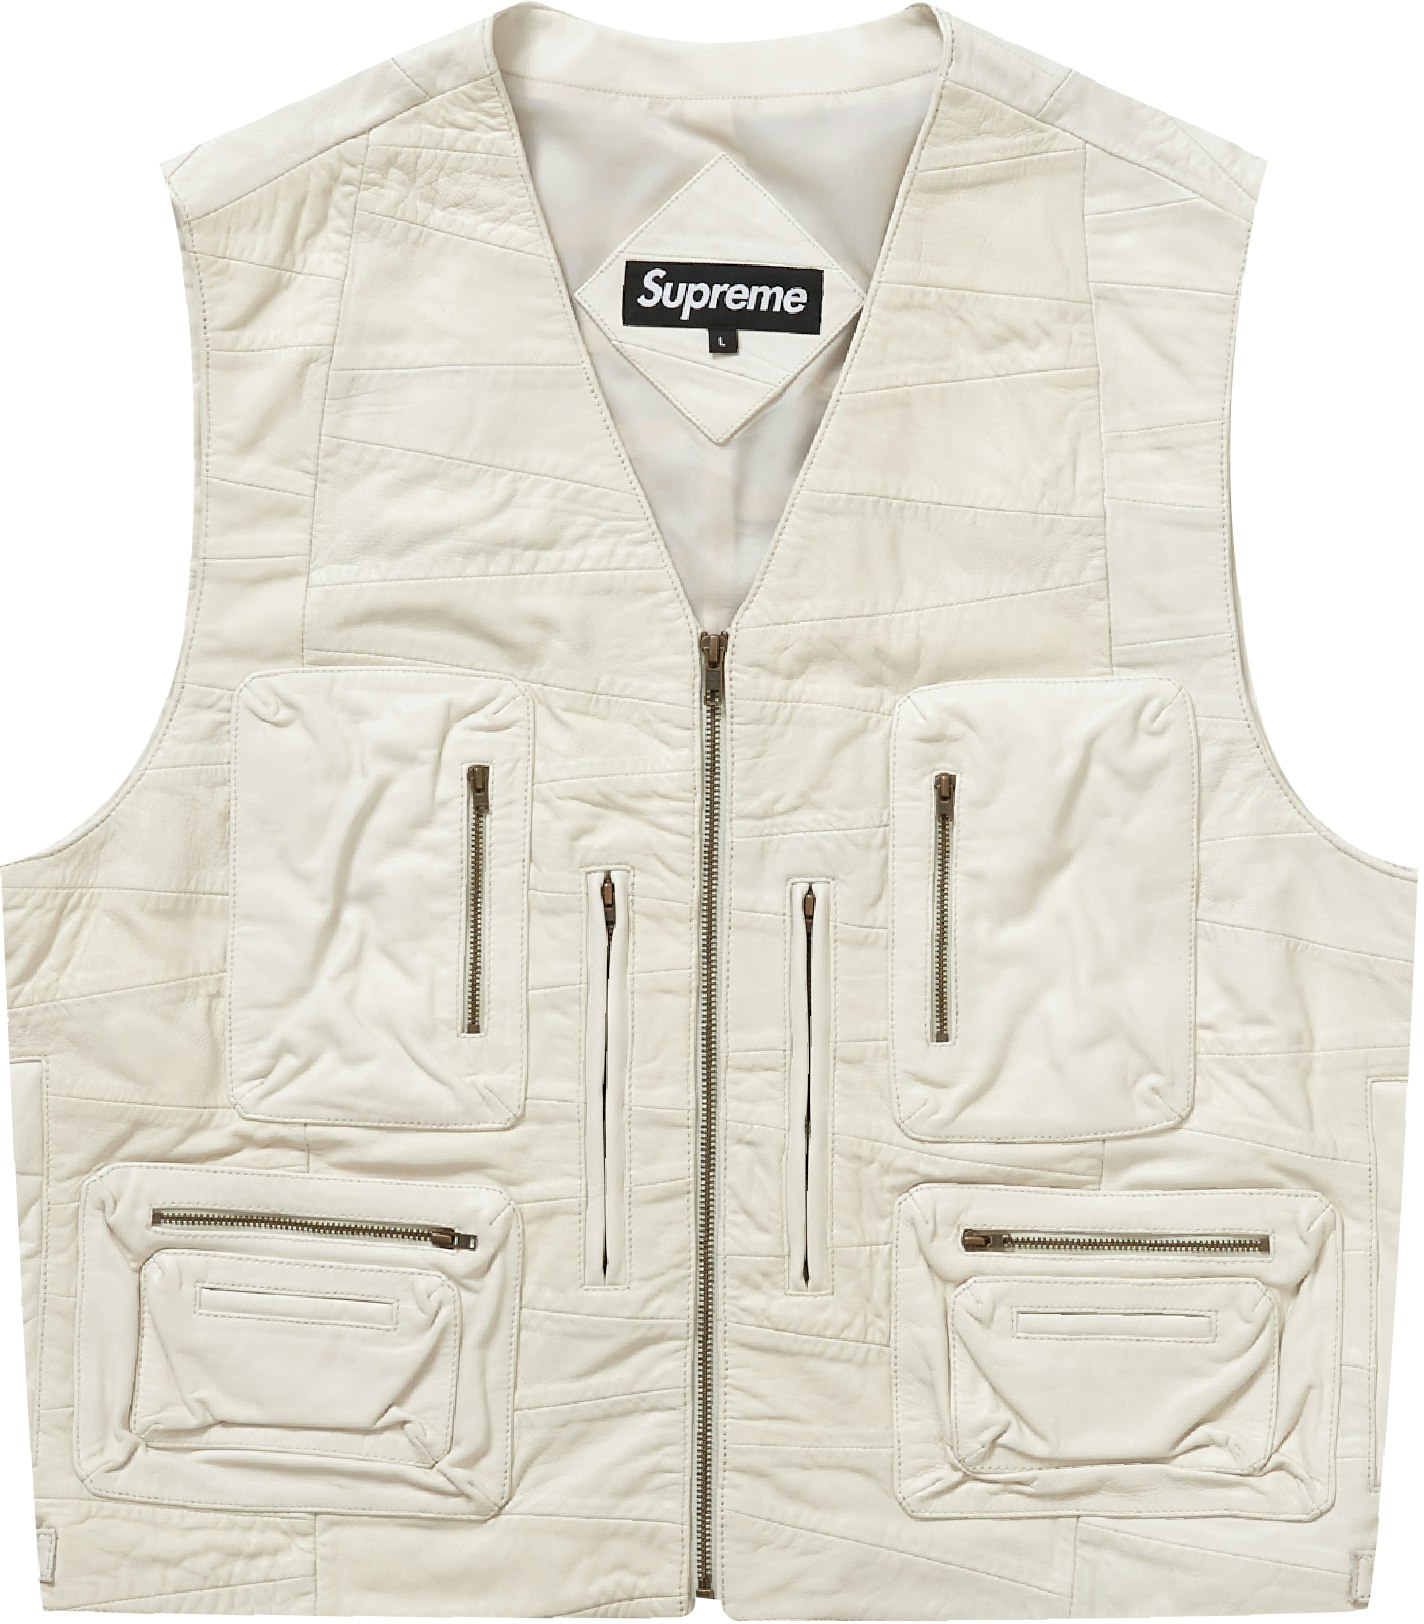 Supreme Patchwork Leather Cargo Vest White - Novelship